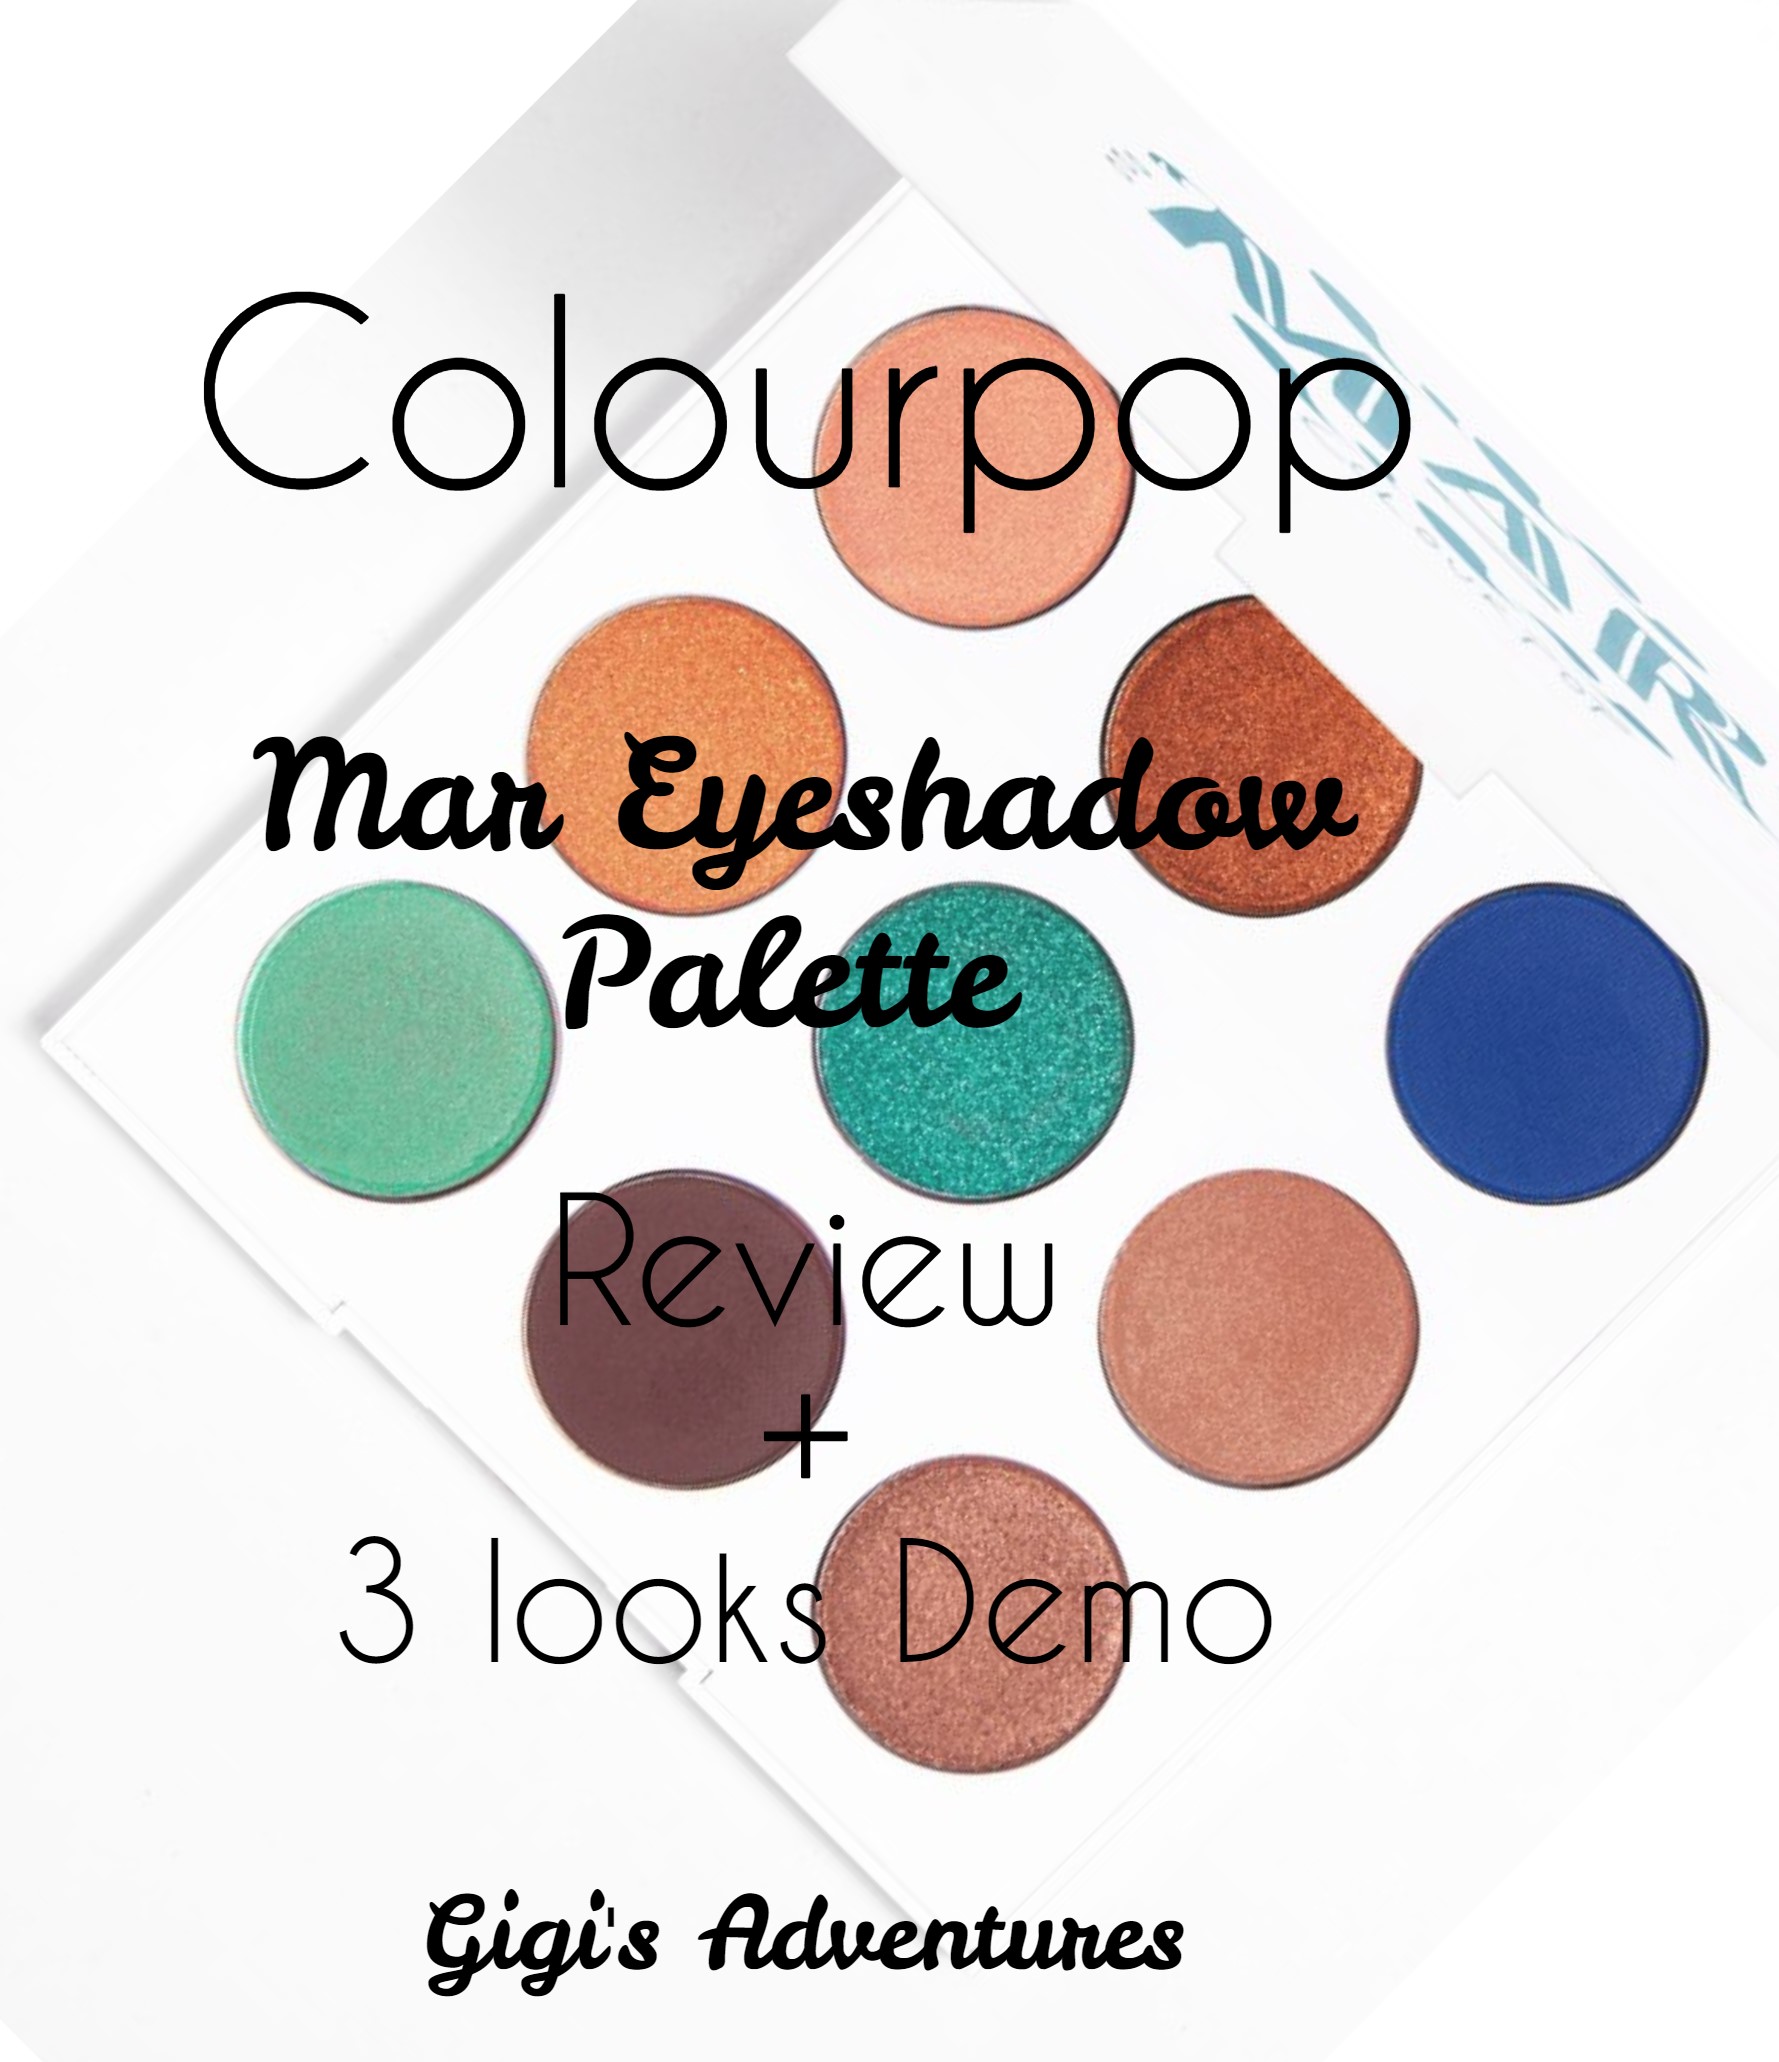 Colourpop Mar Eyeshadow Palette Review 3 Looks Demo Gigi